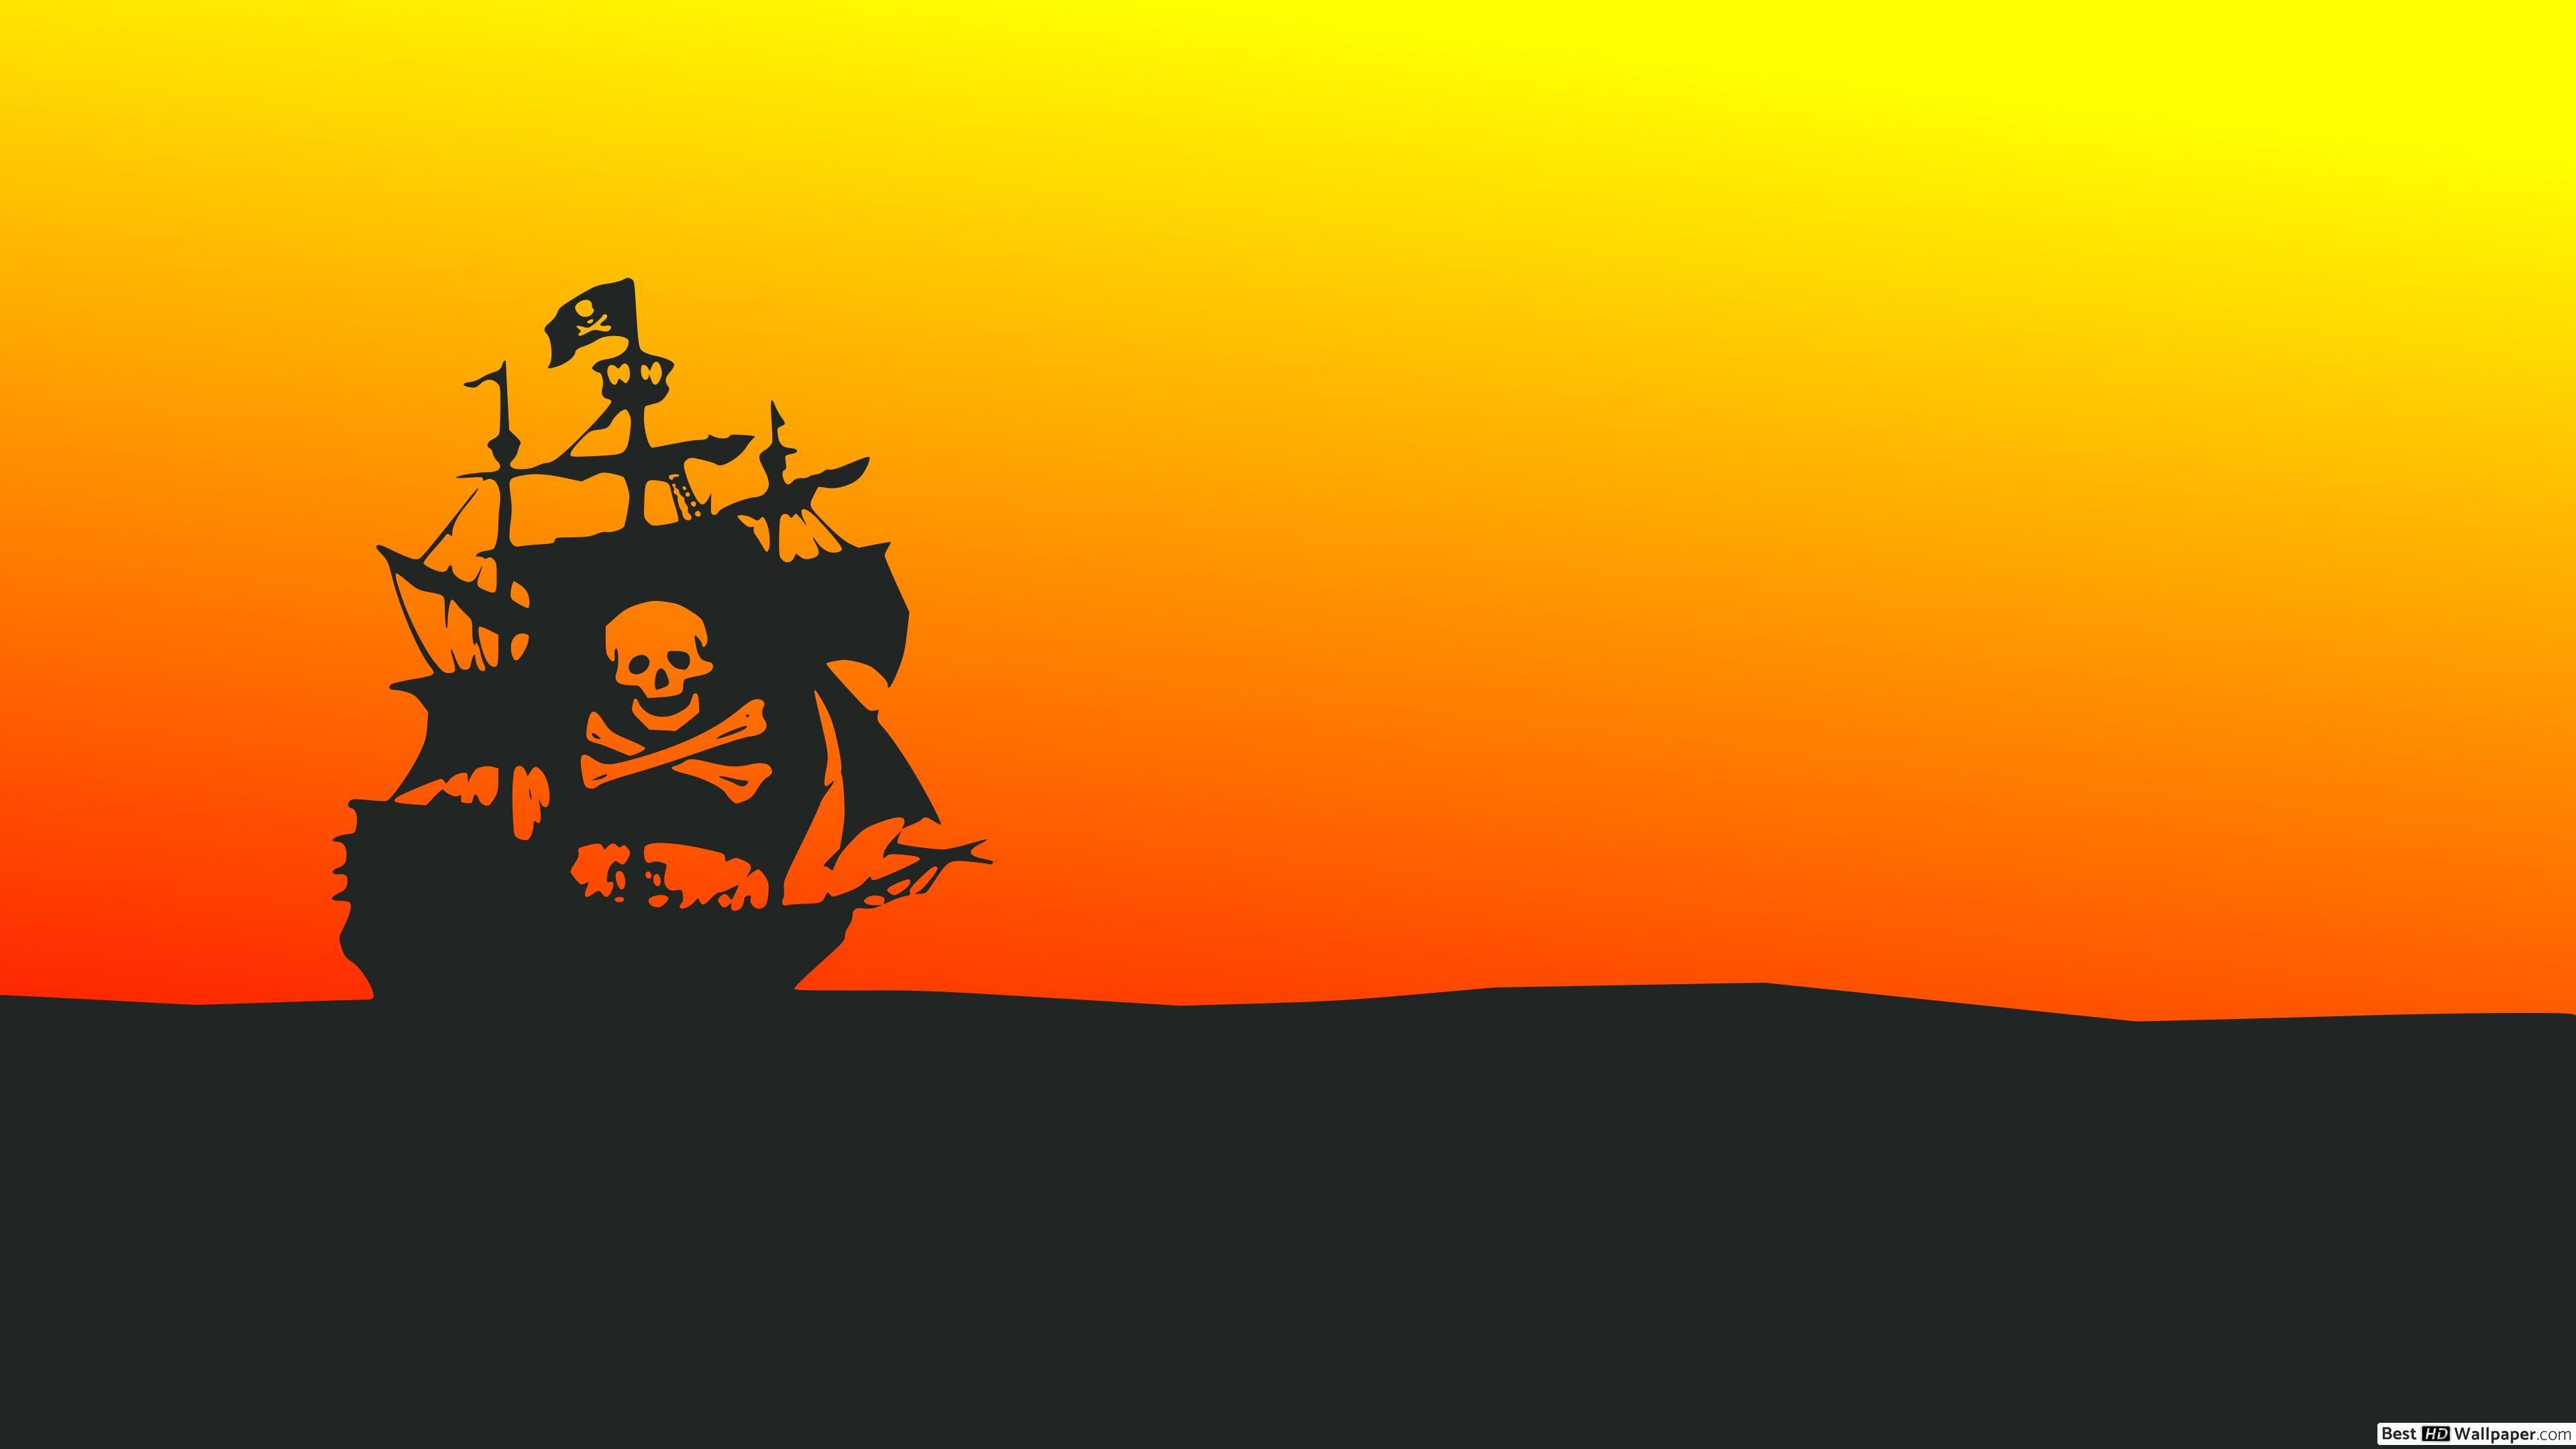 pirate bays download illustrator